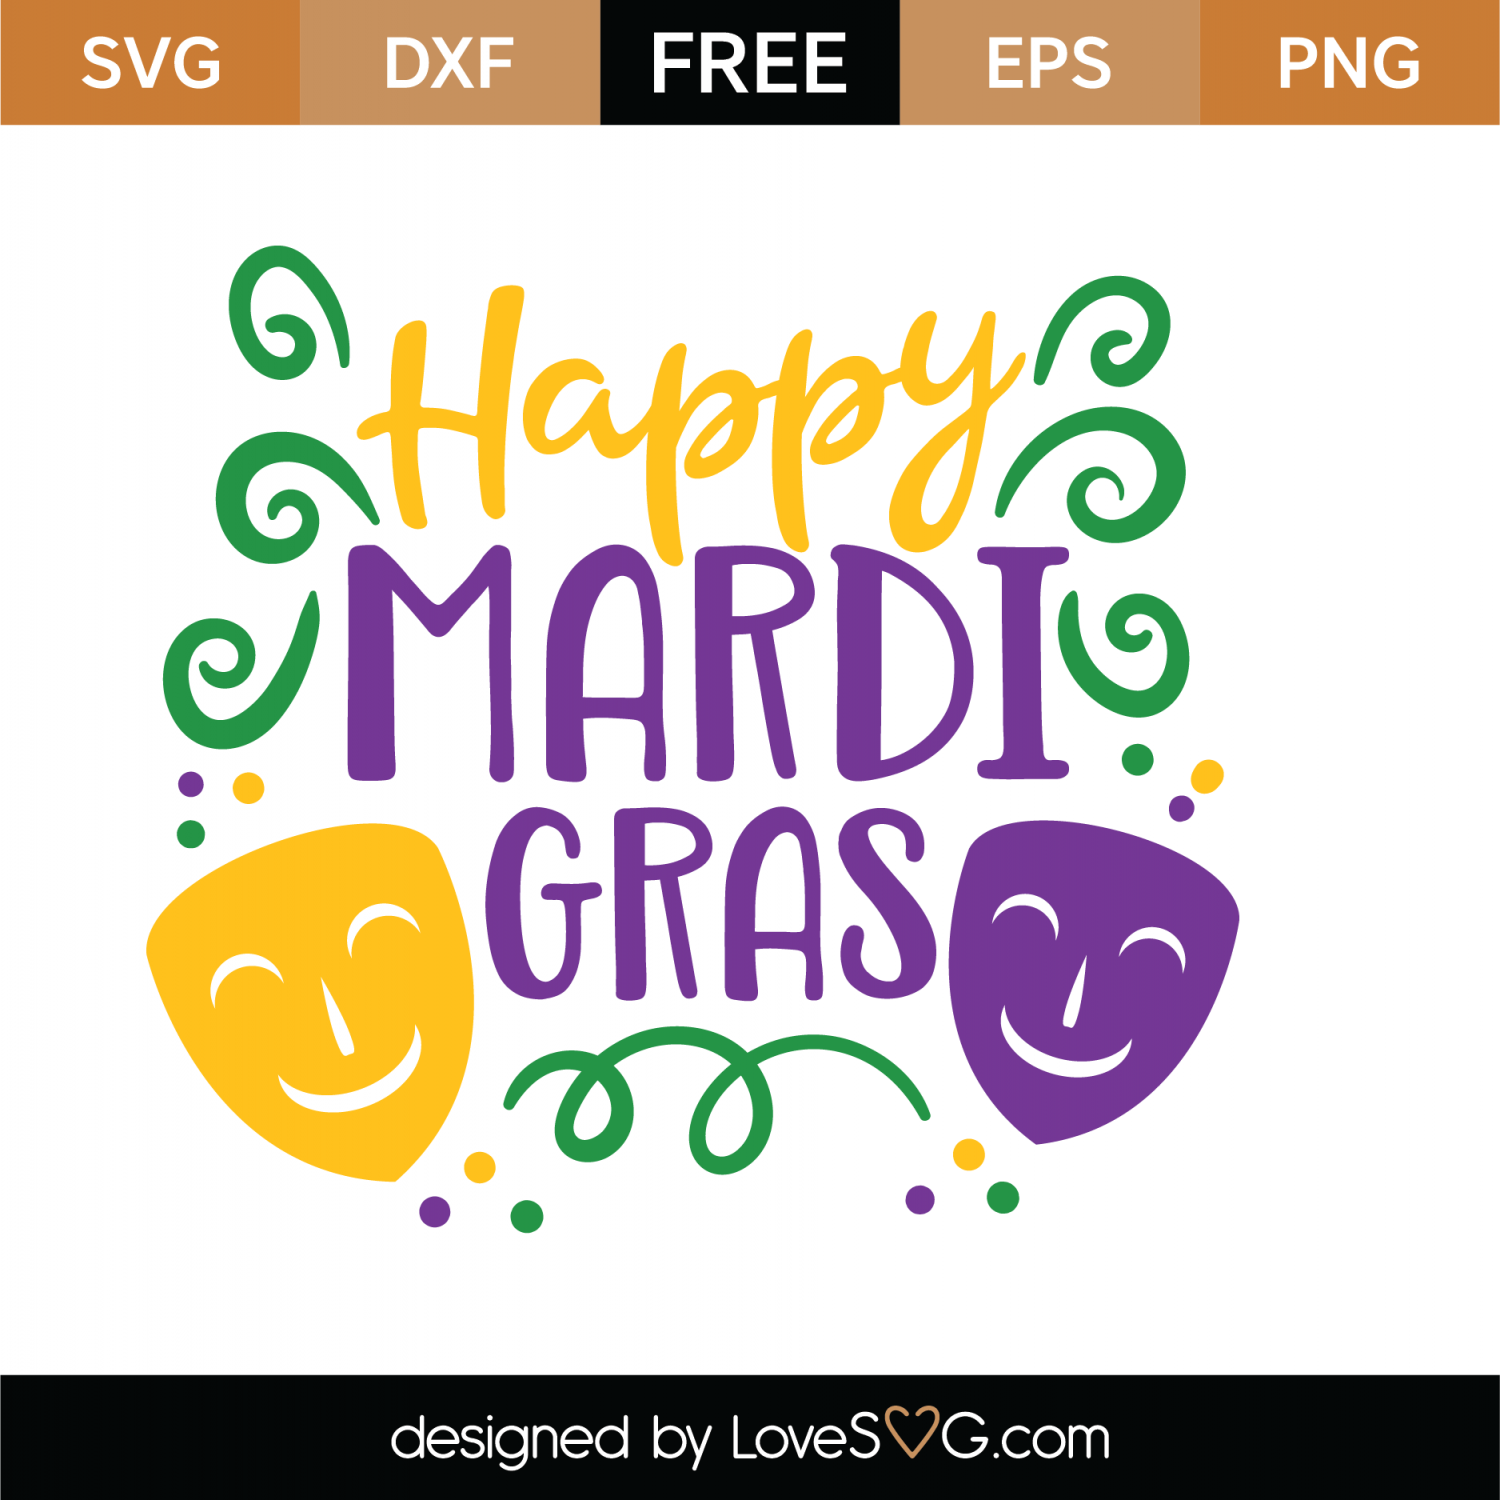 Free Happy Mardi Gras SVG Cut File | Lovesvg.com